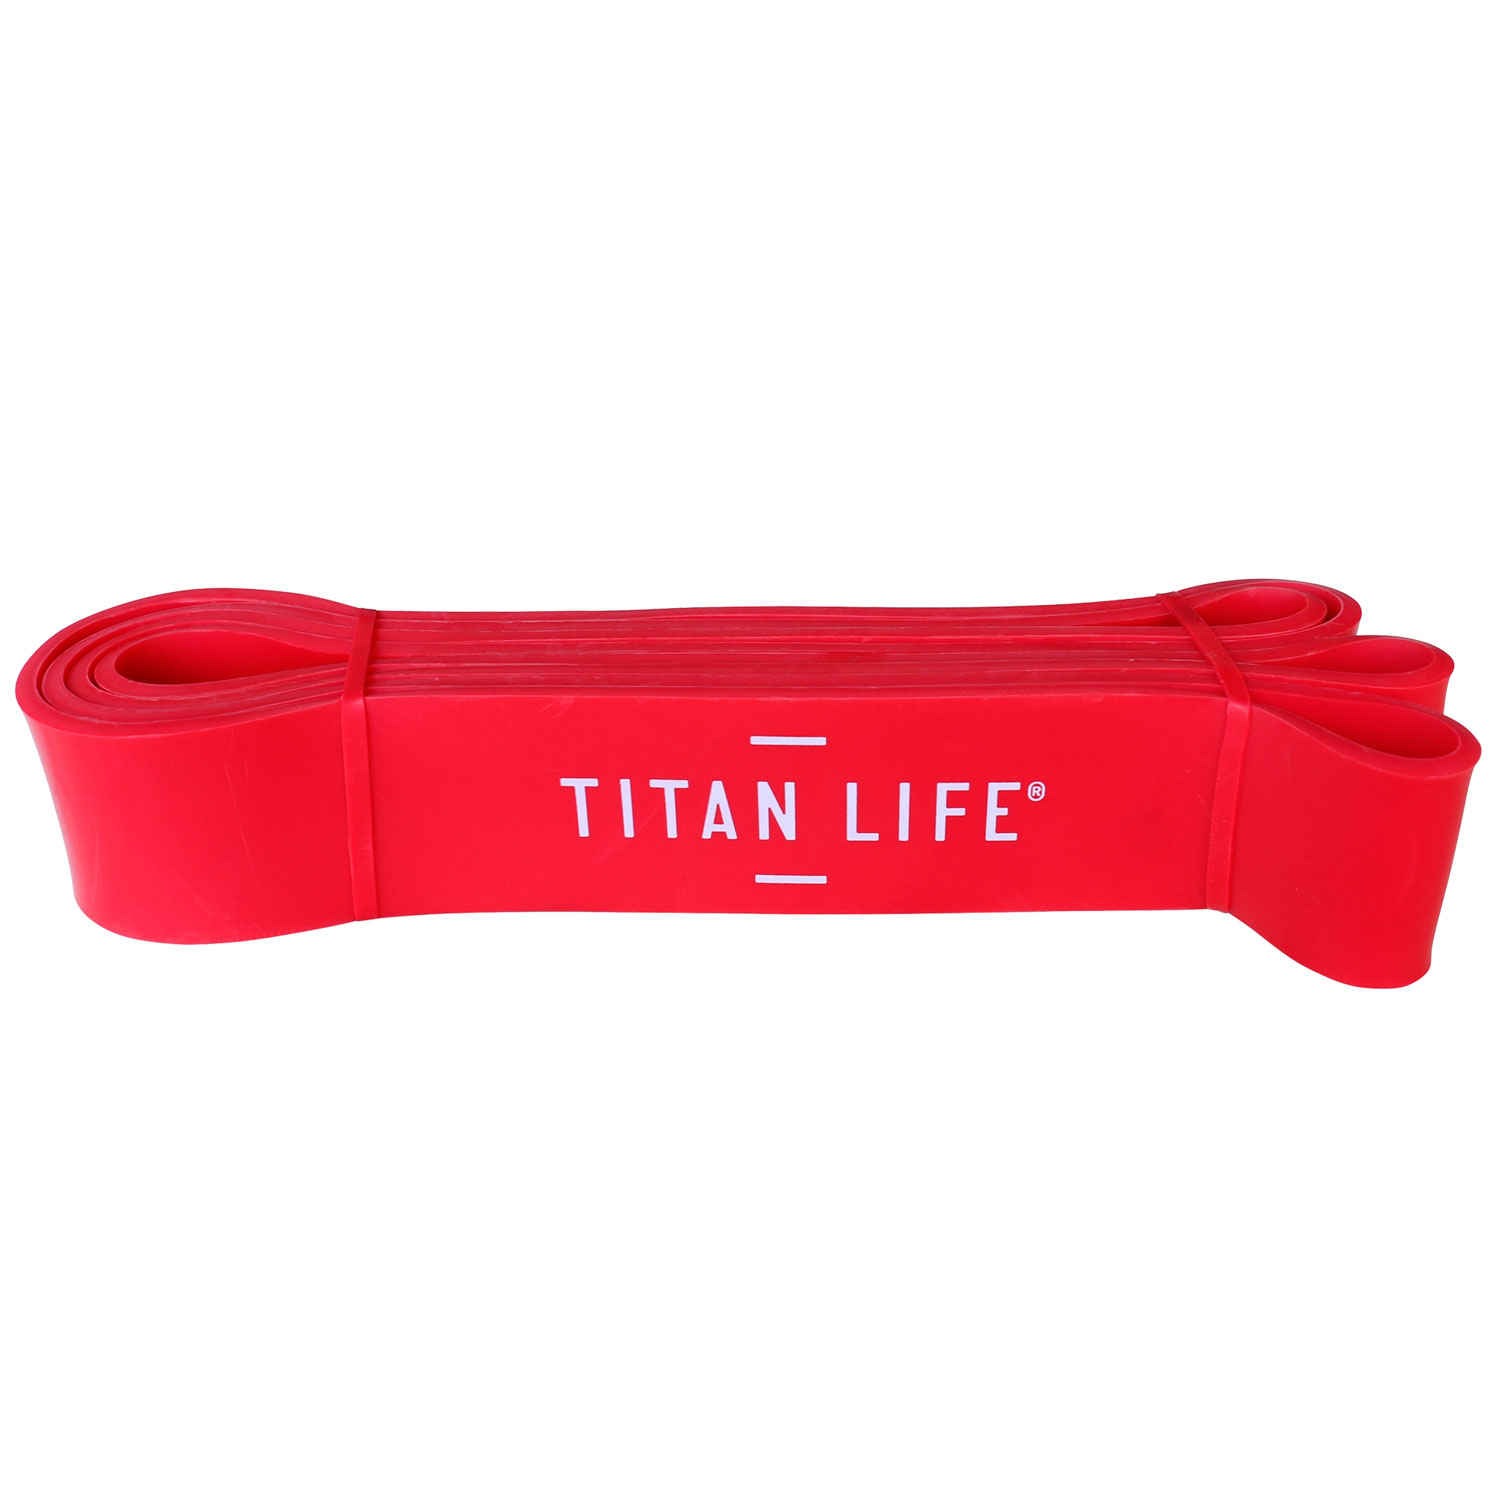 Titan Life Gym Power Band Træningselastik (200 x 4,4 x 0,45 cm)